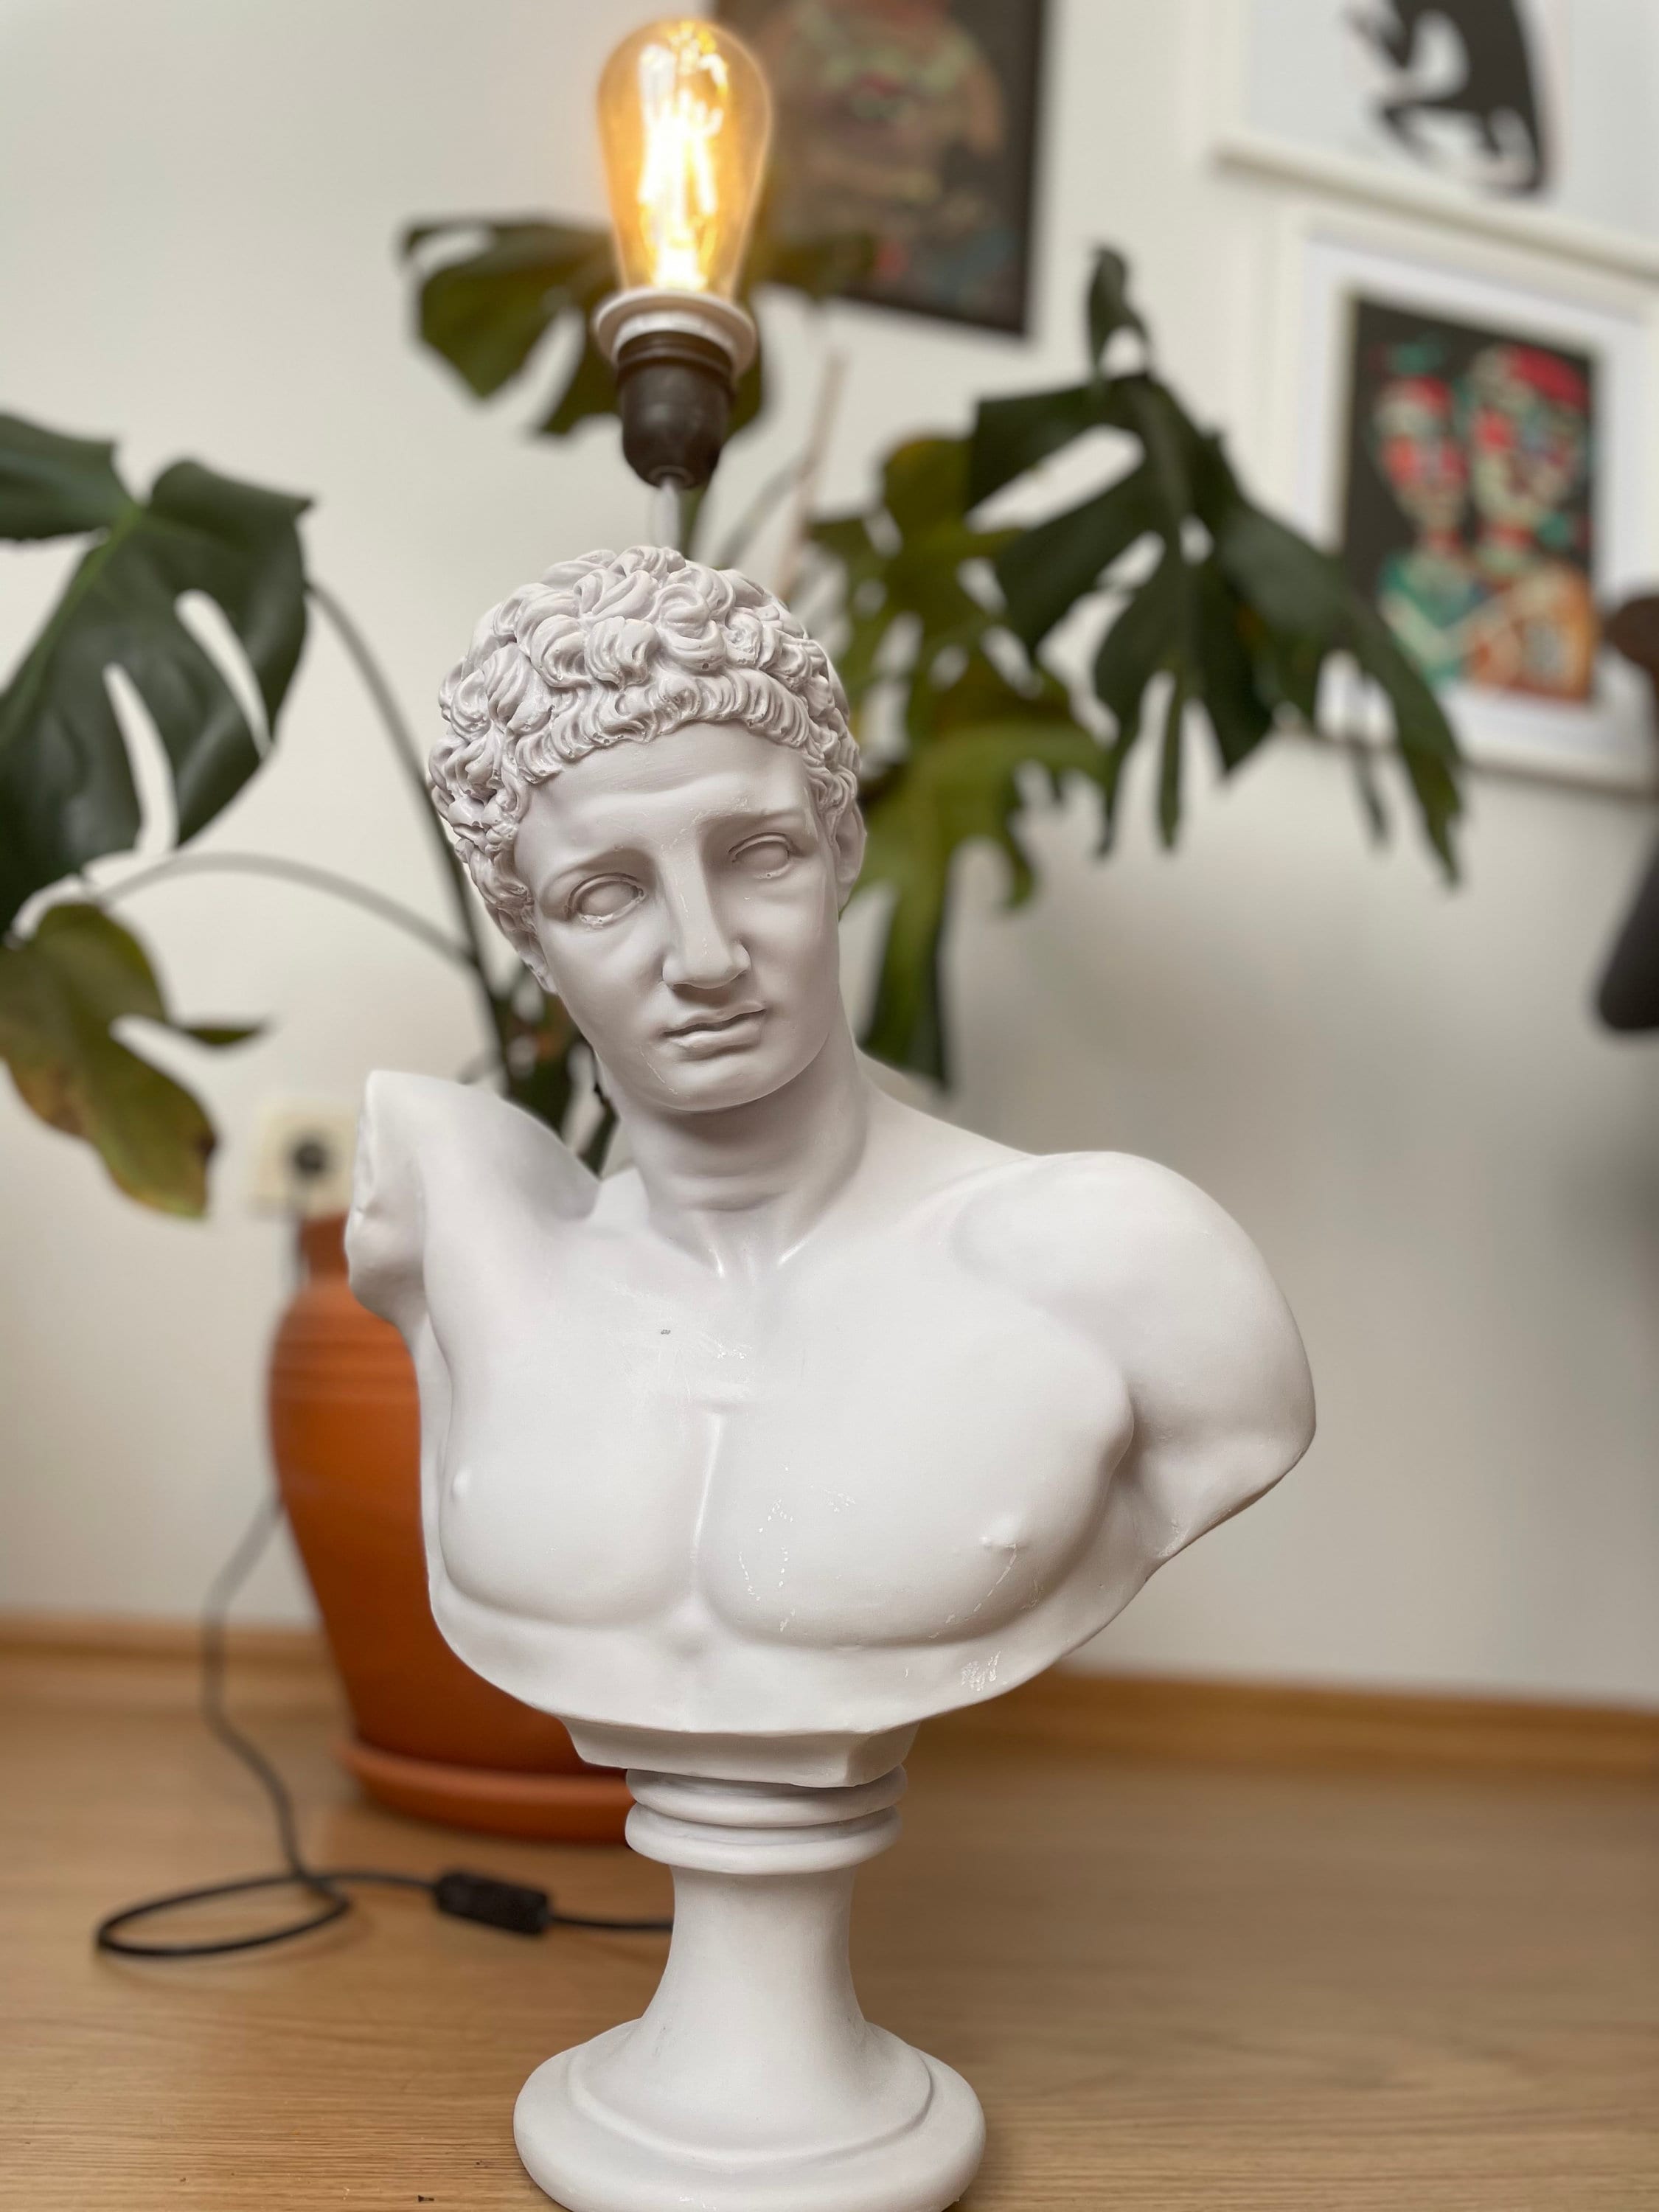 David Bust Statue: Iconic Symbol of Renaissance Beauty